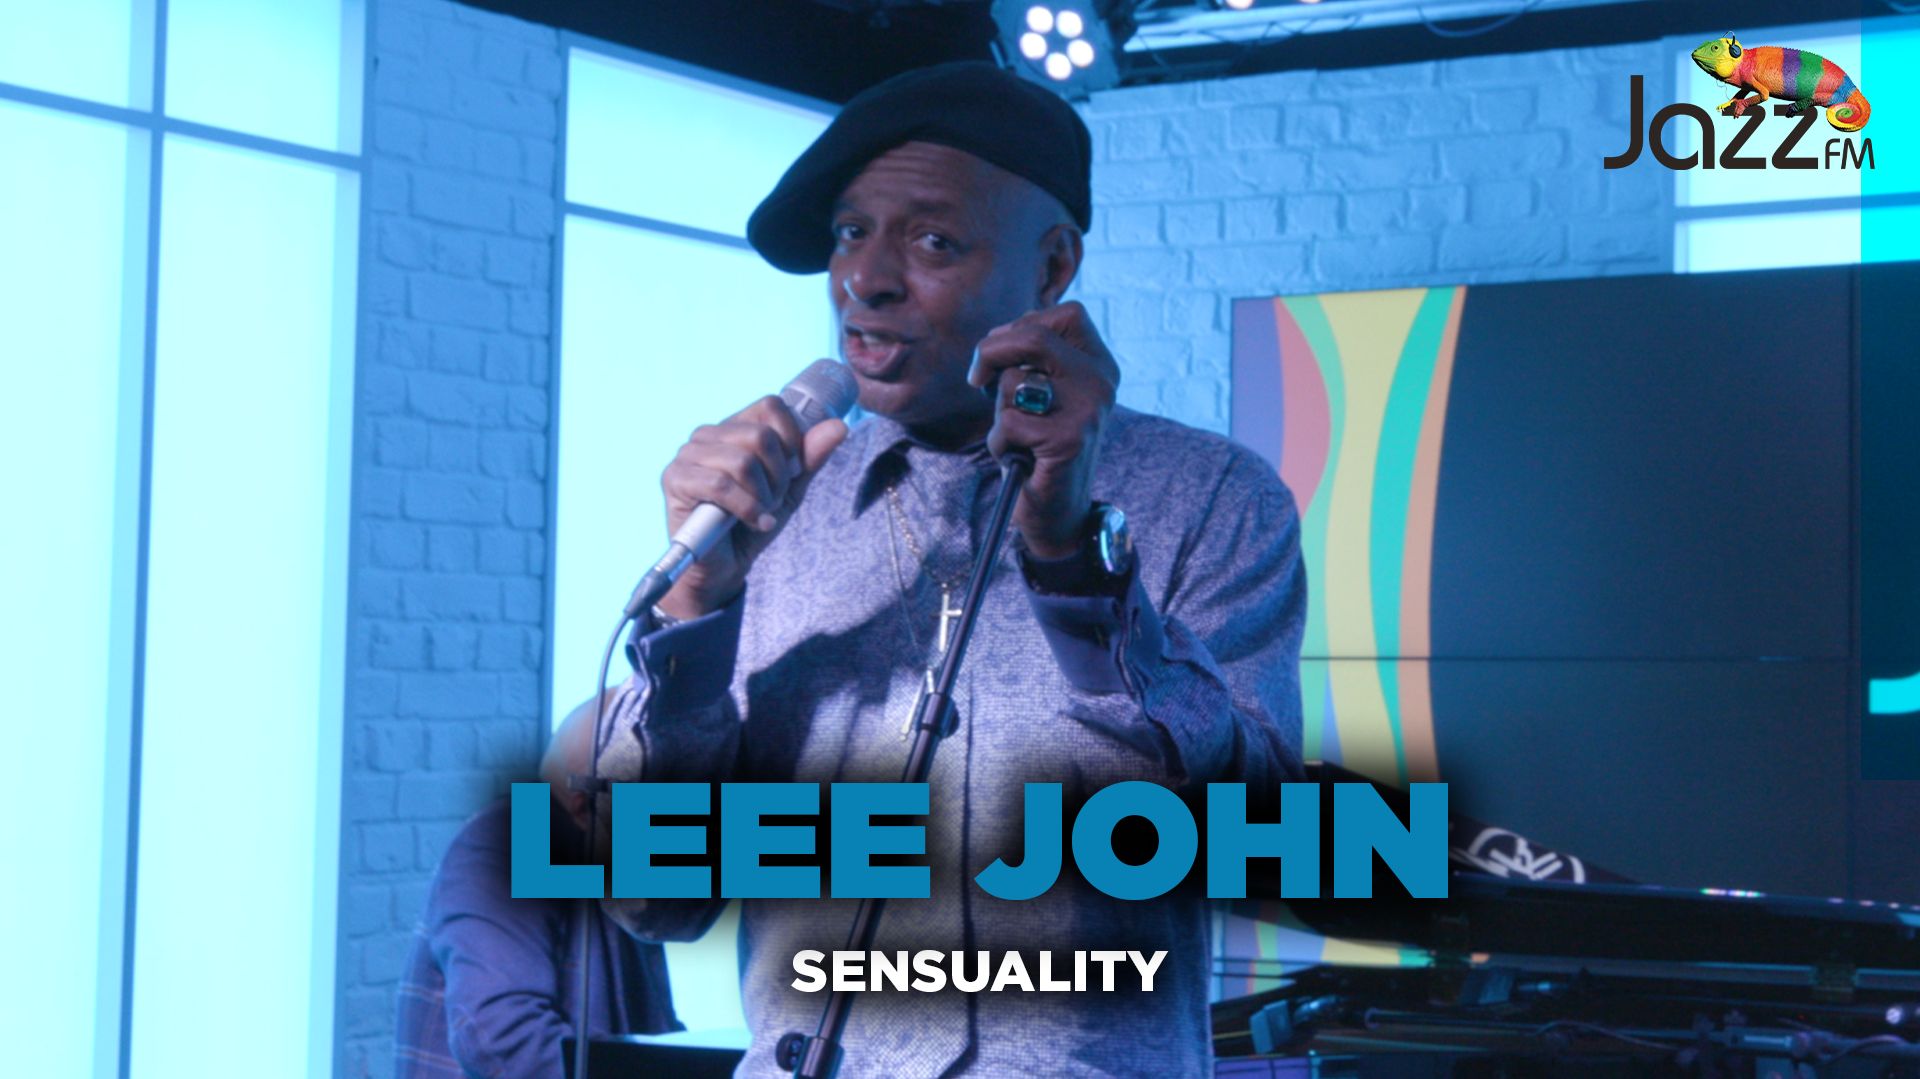 WATCH: Leee John's (Imagination) performance of 'Sensuality' - Jazz FM  Session